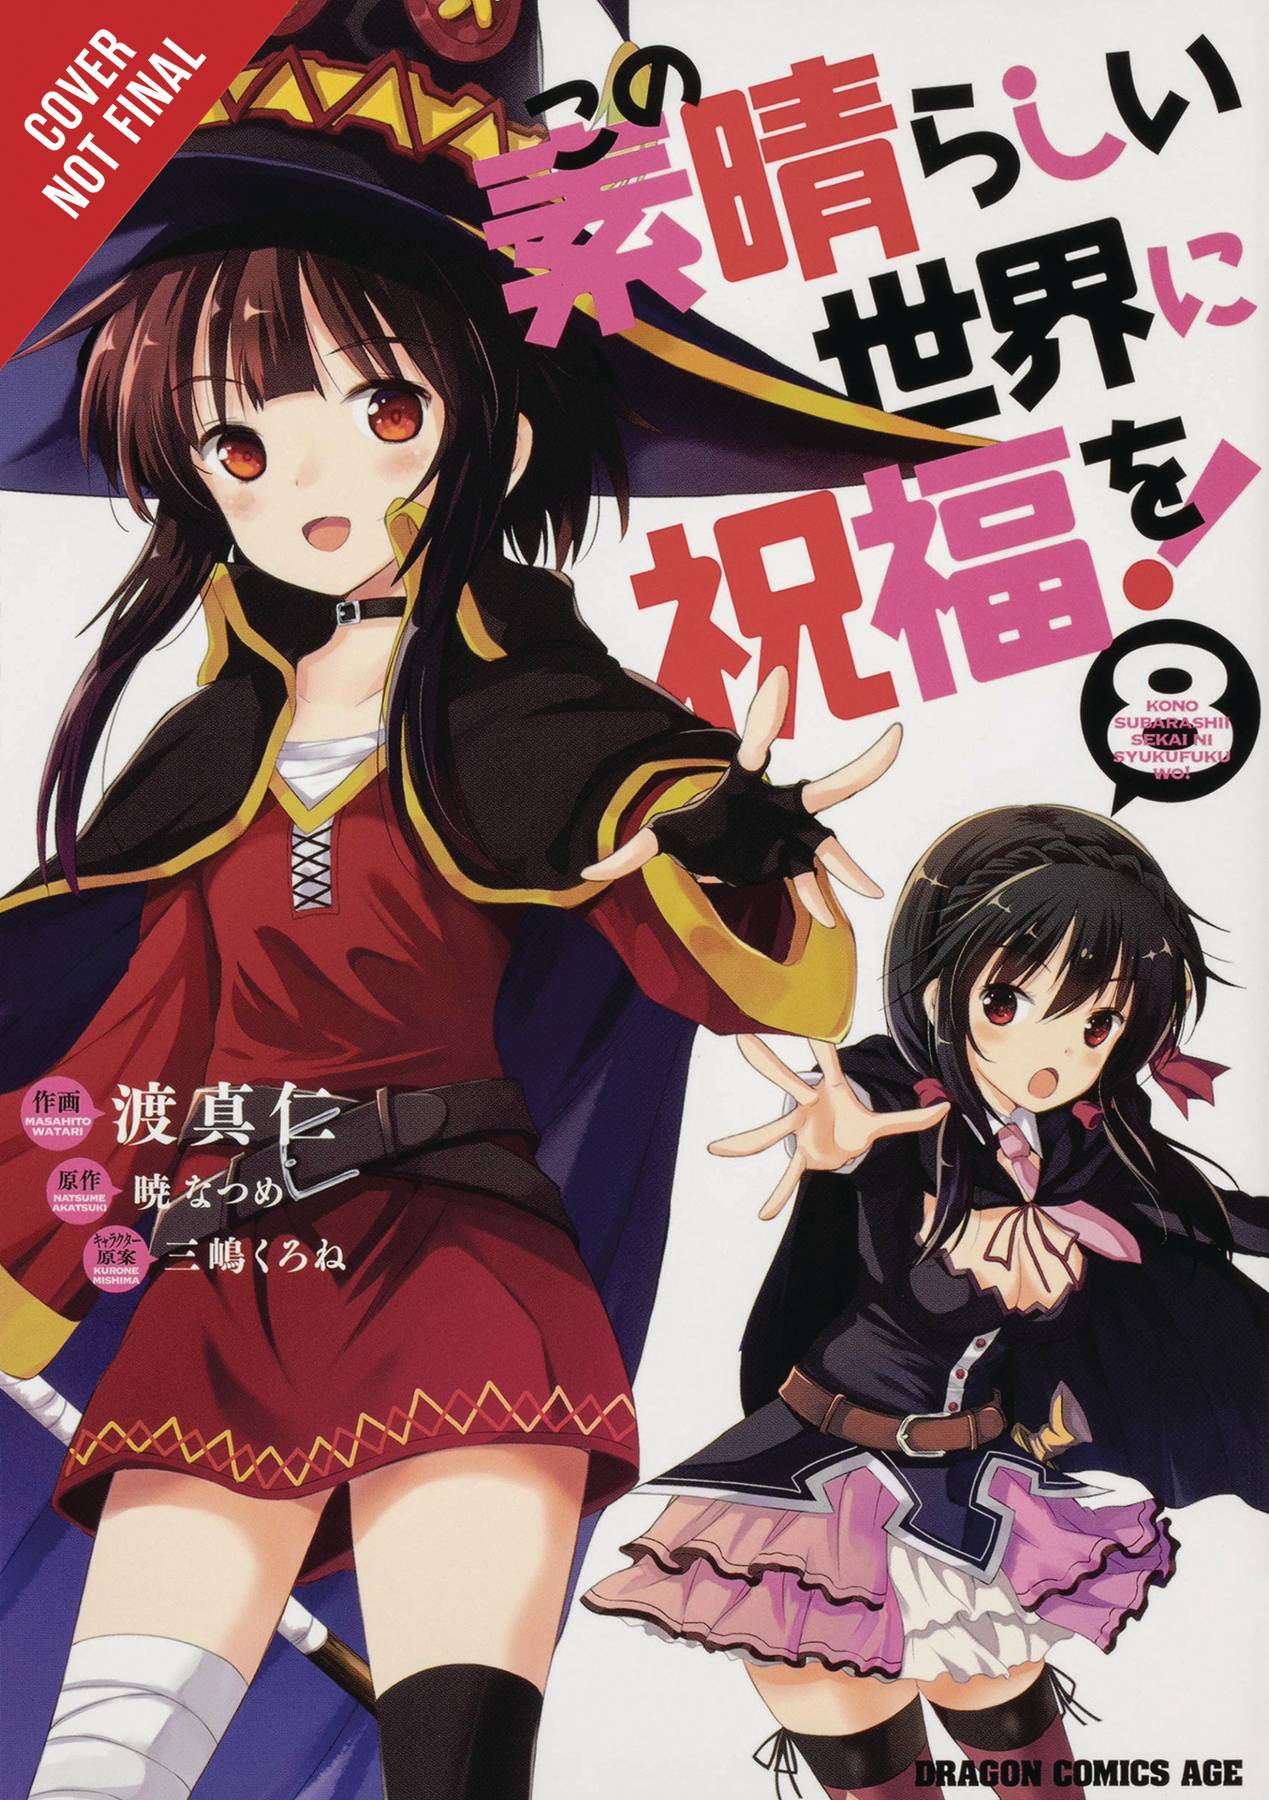 Konosuba: God's Blessing on this Wonderful World Manga Volume 8